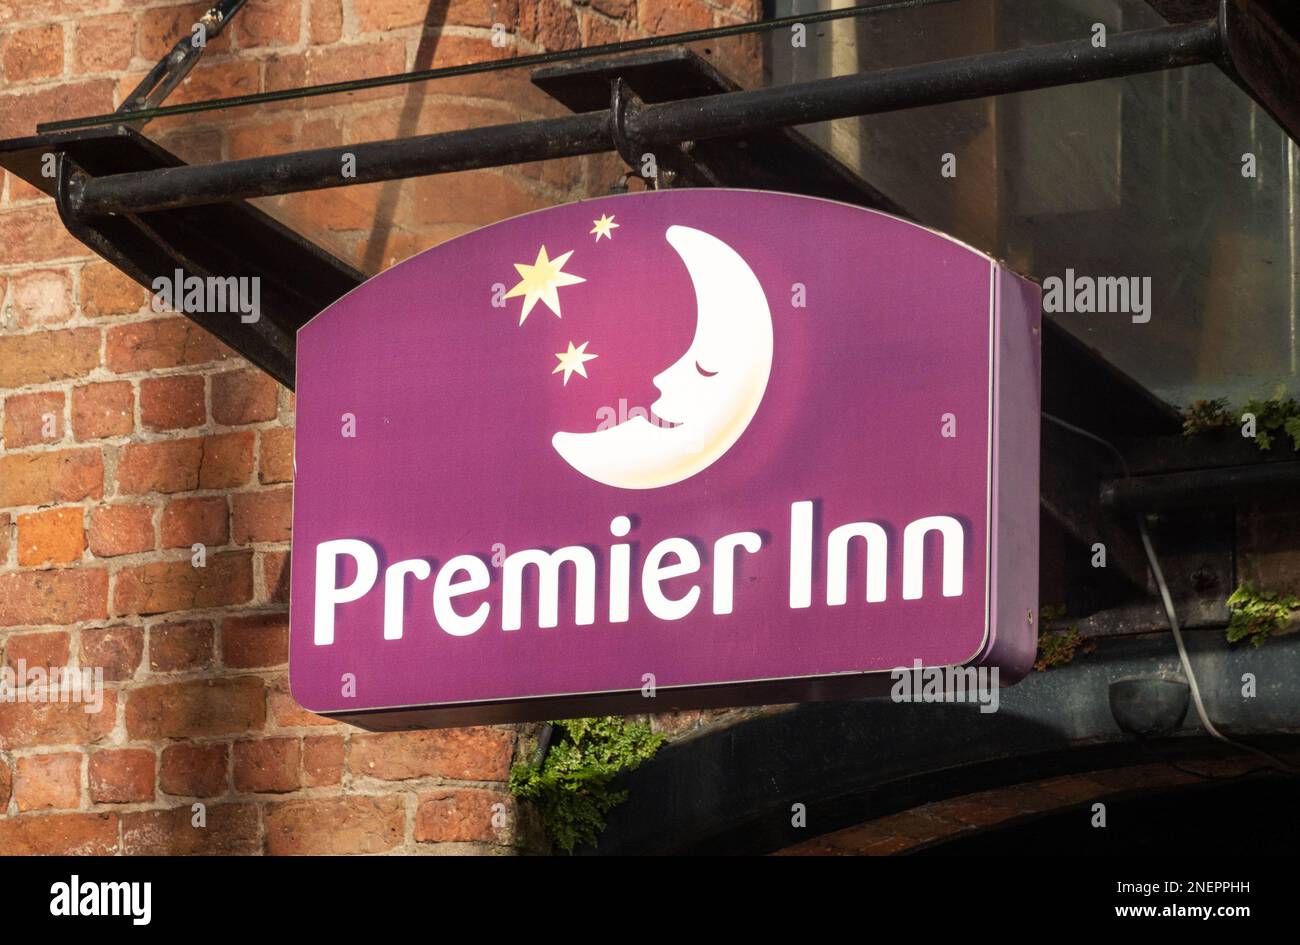 Premier Inn at Royal Albert Dock in Liverpool Stock Photo